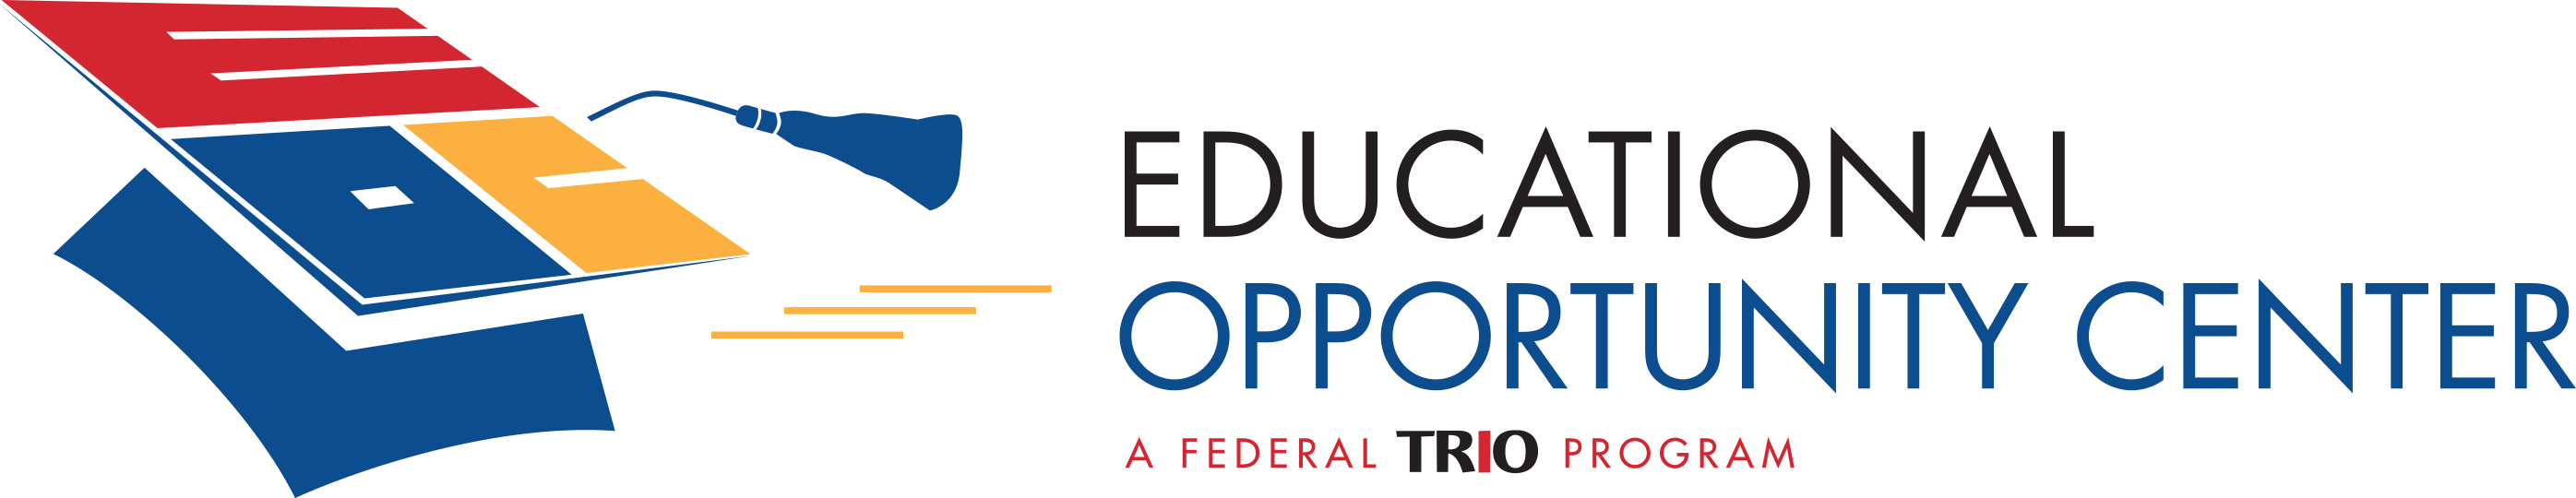 horizontal educational opportunity center logo